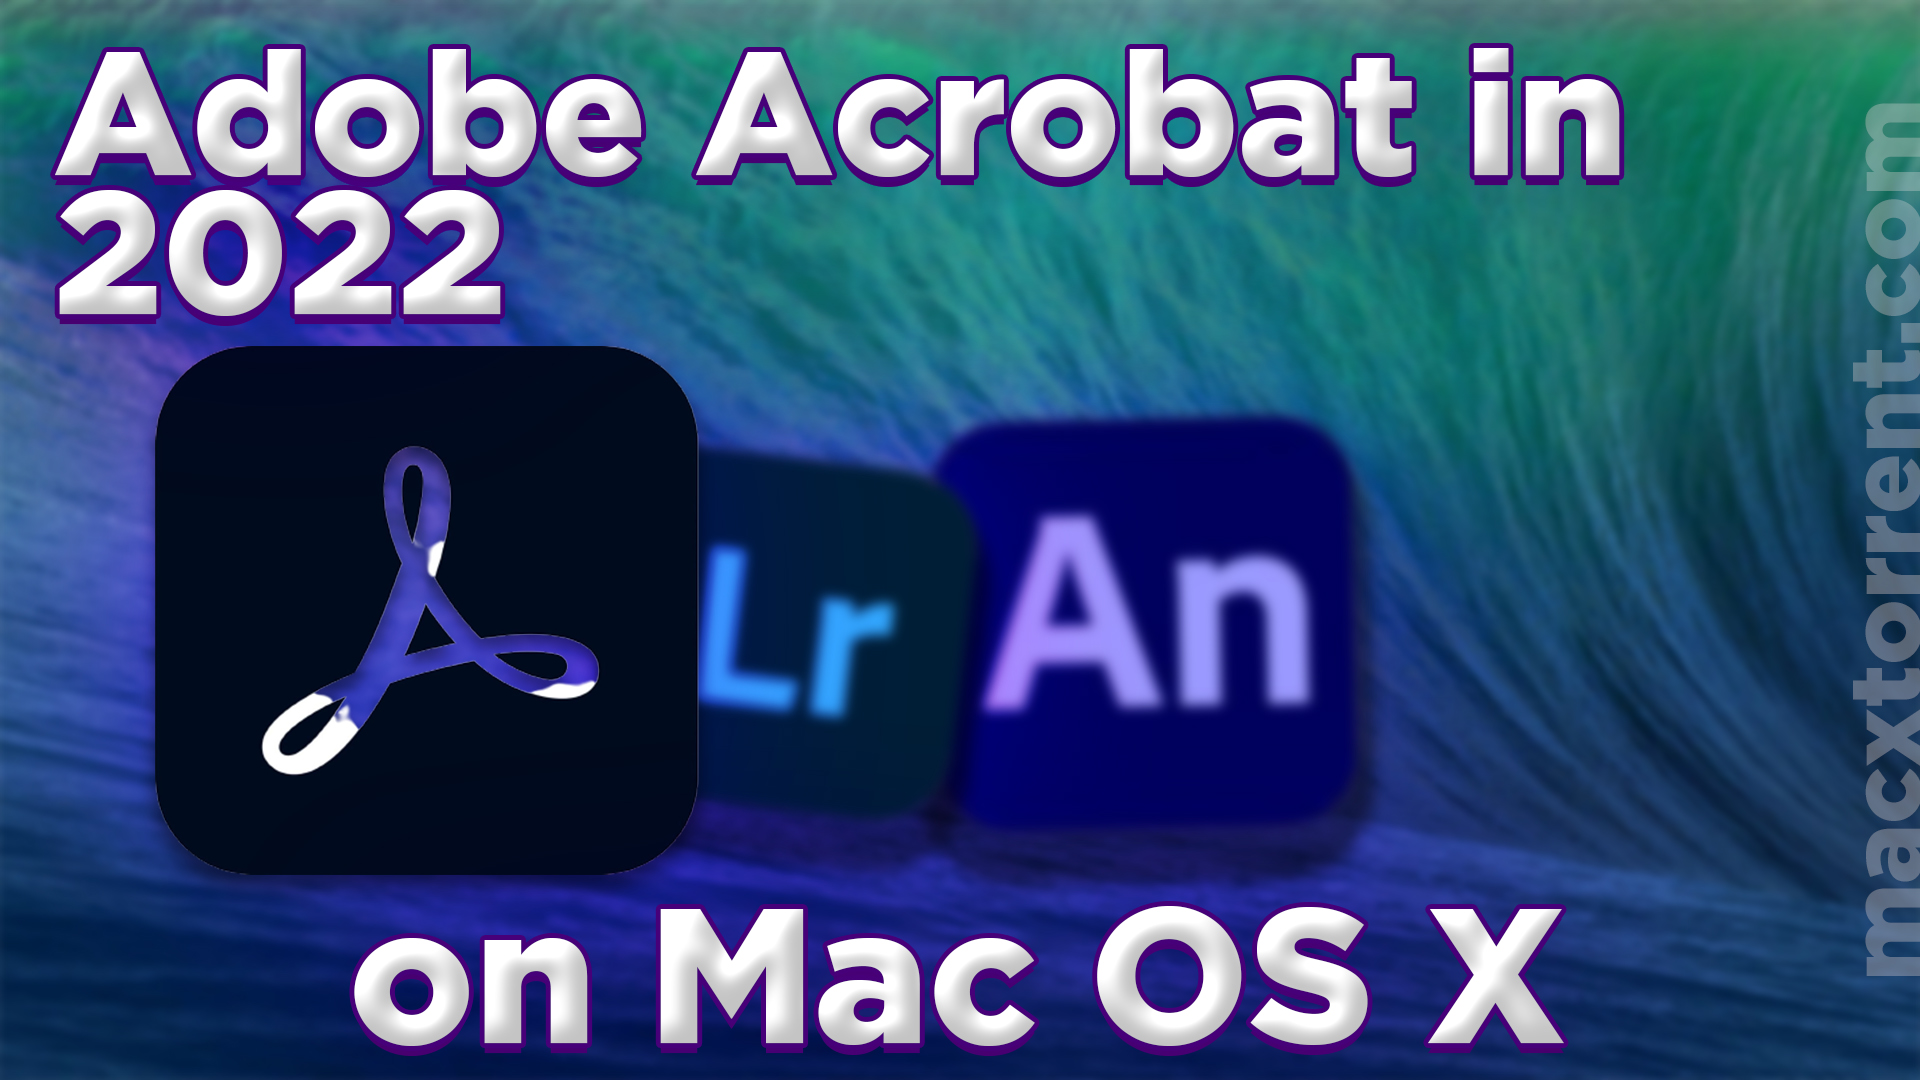 Adobe Acrobat 2022 on Mac